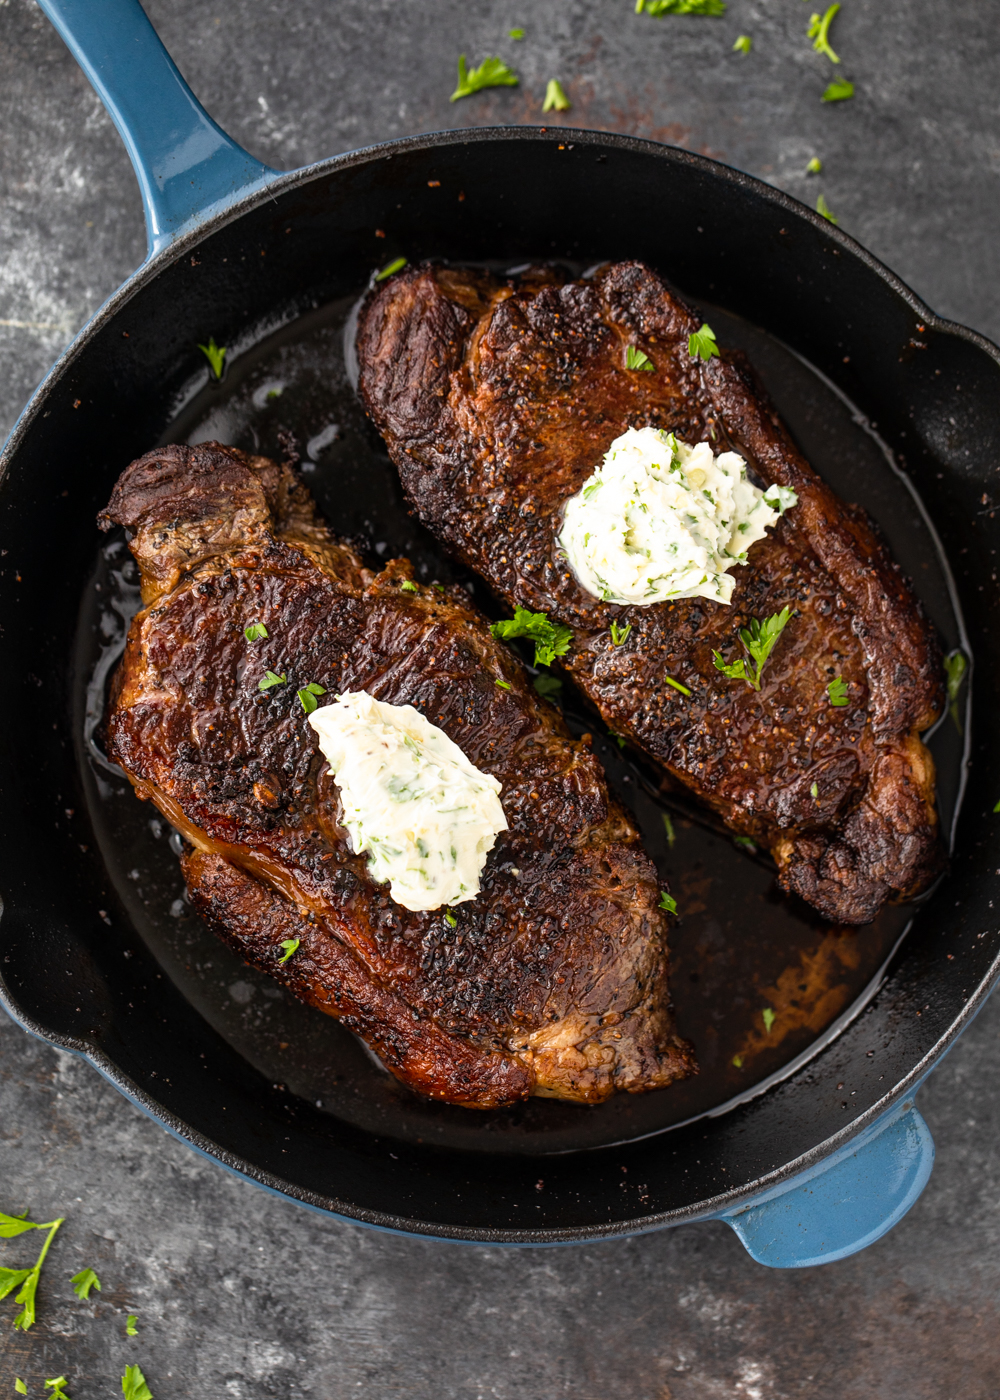 https://gimmedelicious.com/wp-content/uploads/2020/07/Steak-with-Garlic-Butter-Sauce-2.jpg